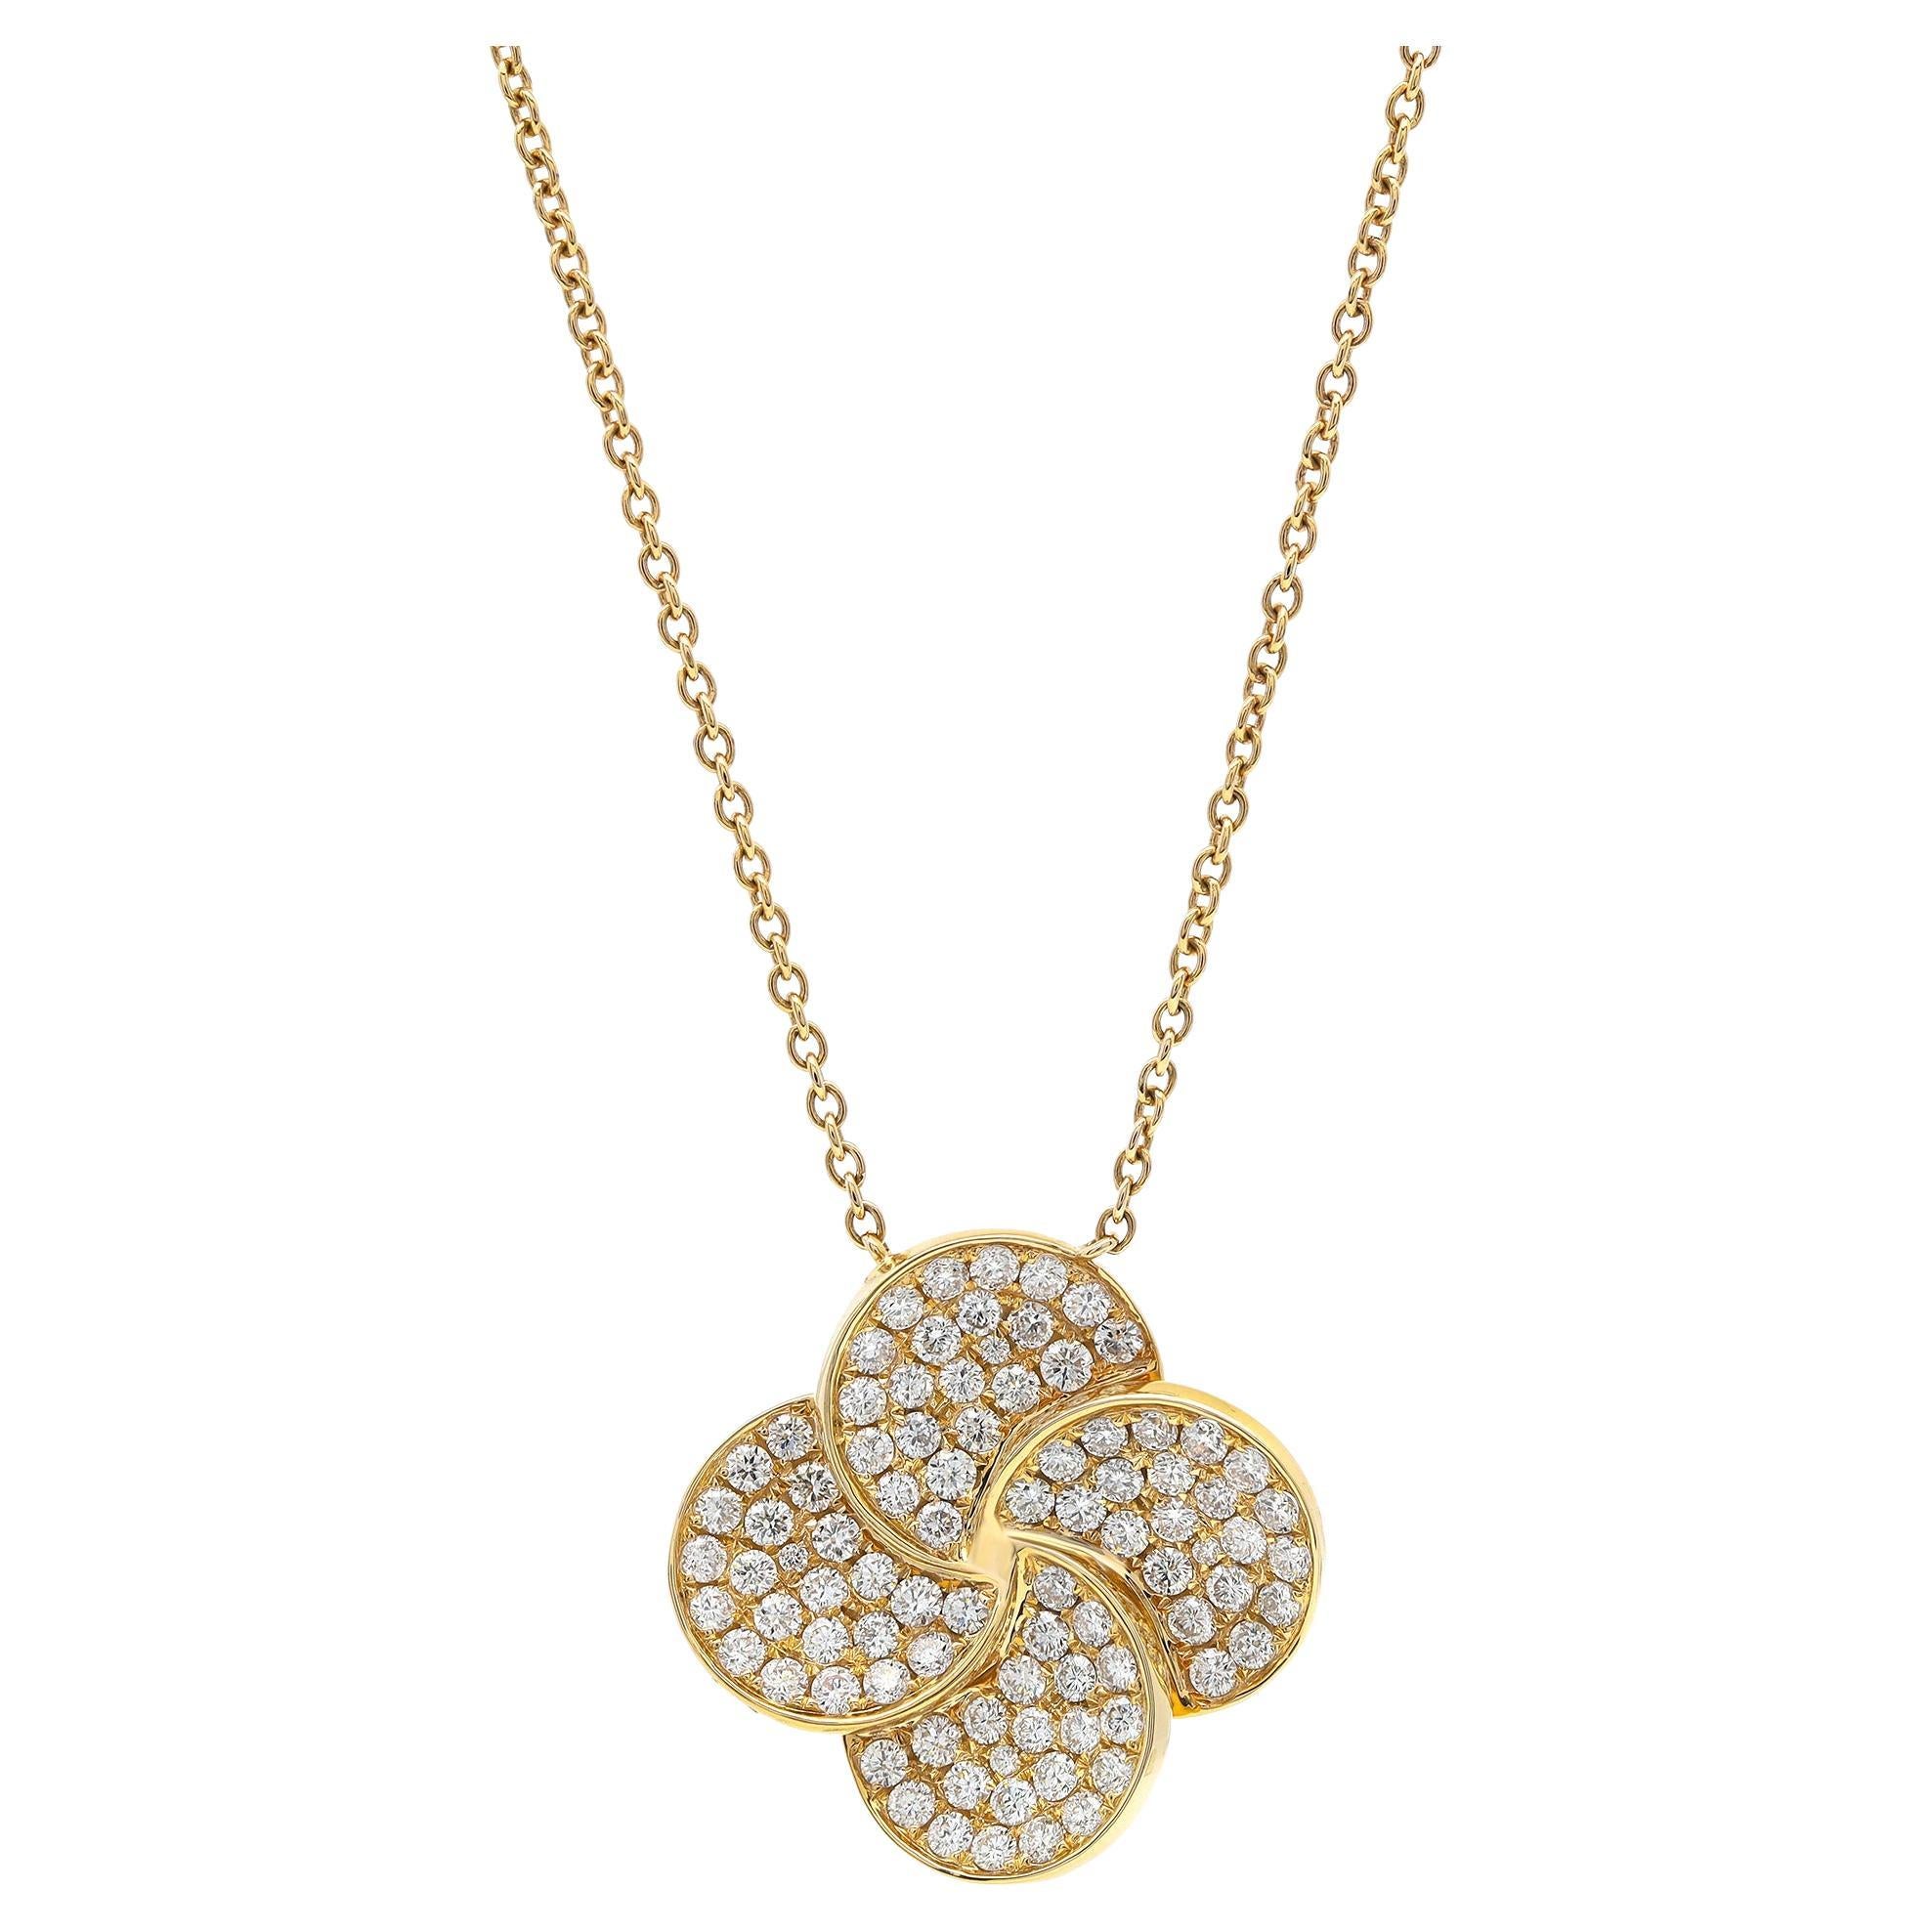 1.77Cttw Pave Set Round Cut Diamond Flower Pendant Necklace 18K Yellow Gold For Sale